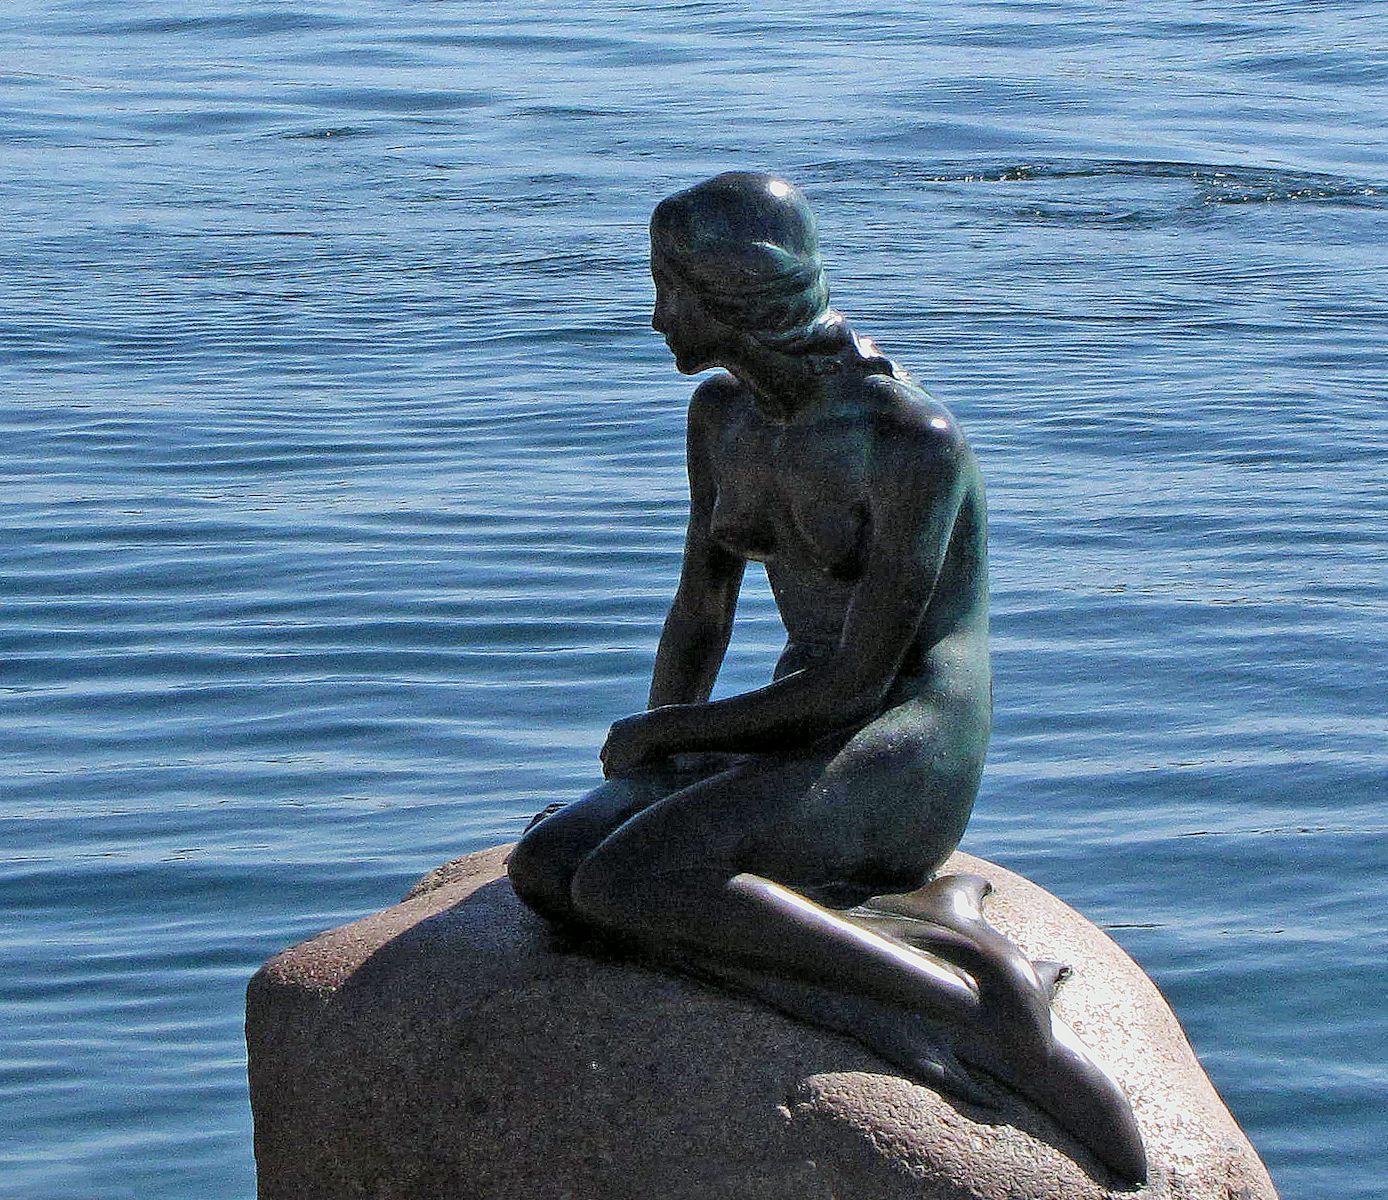 The famous Little Mermaid statue